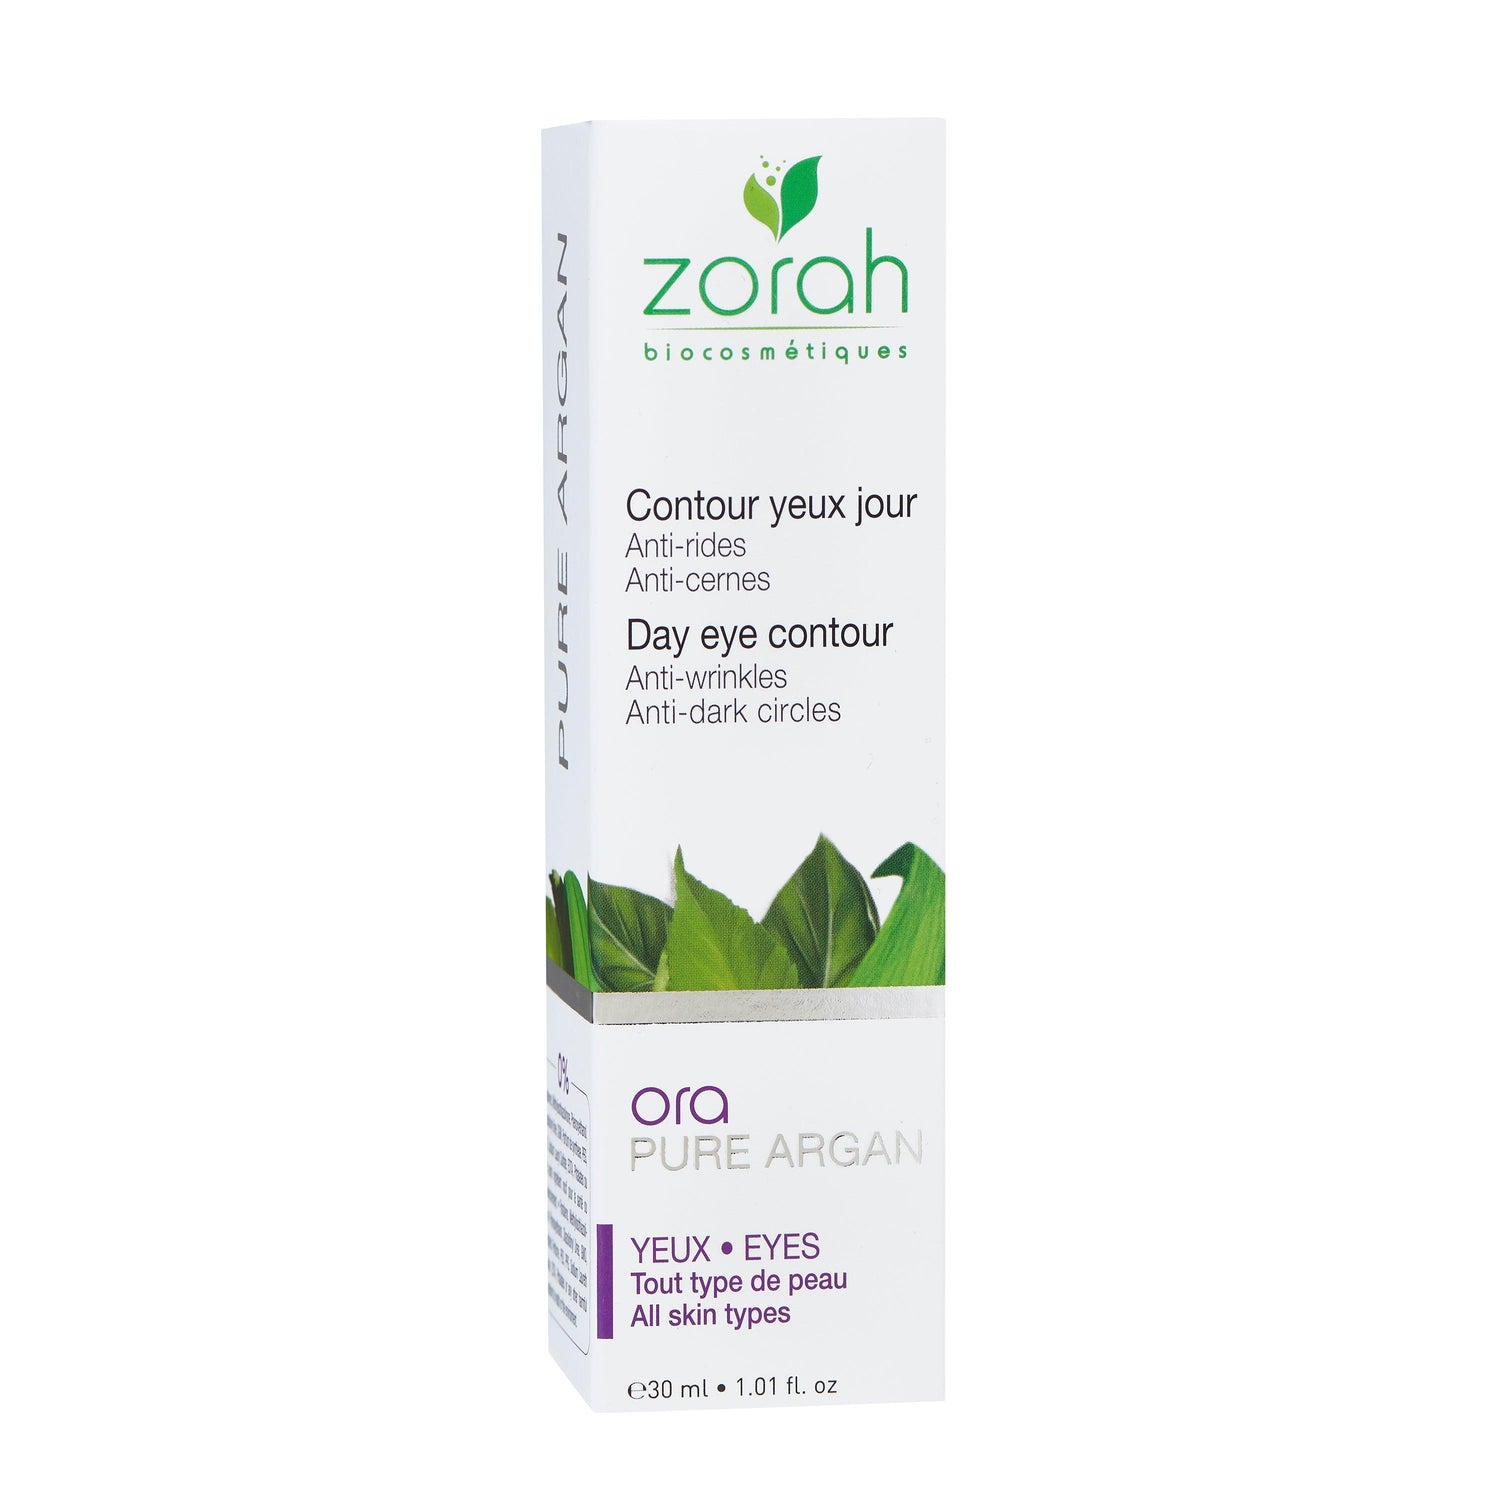 ora | day eye contour cream - Zorah biocosmétiques